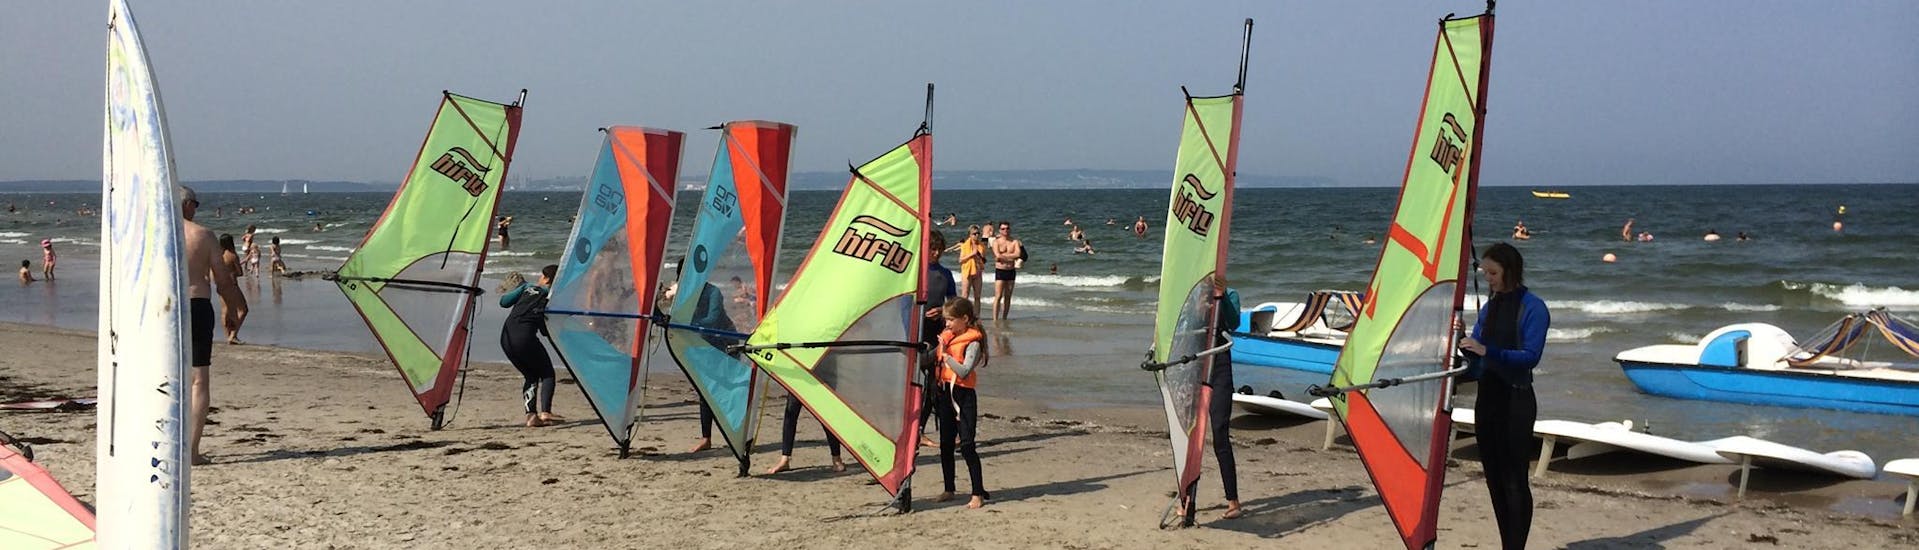 Windsurfing Lessons for Kids - Binz with Wassersport Binz - Hero image